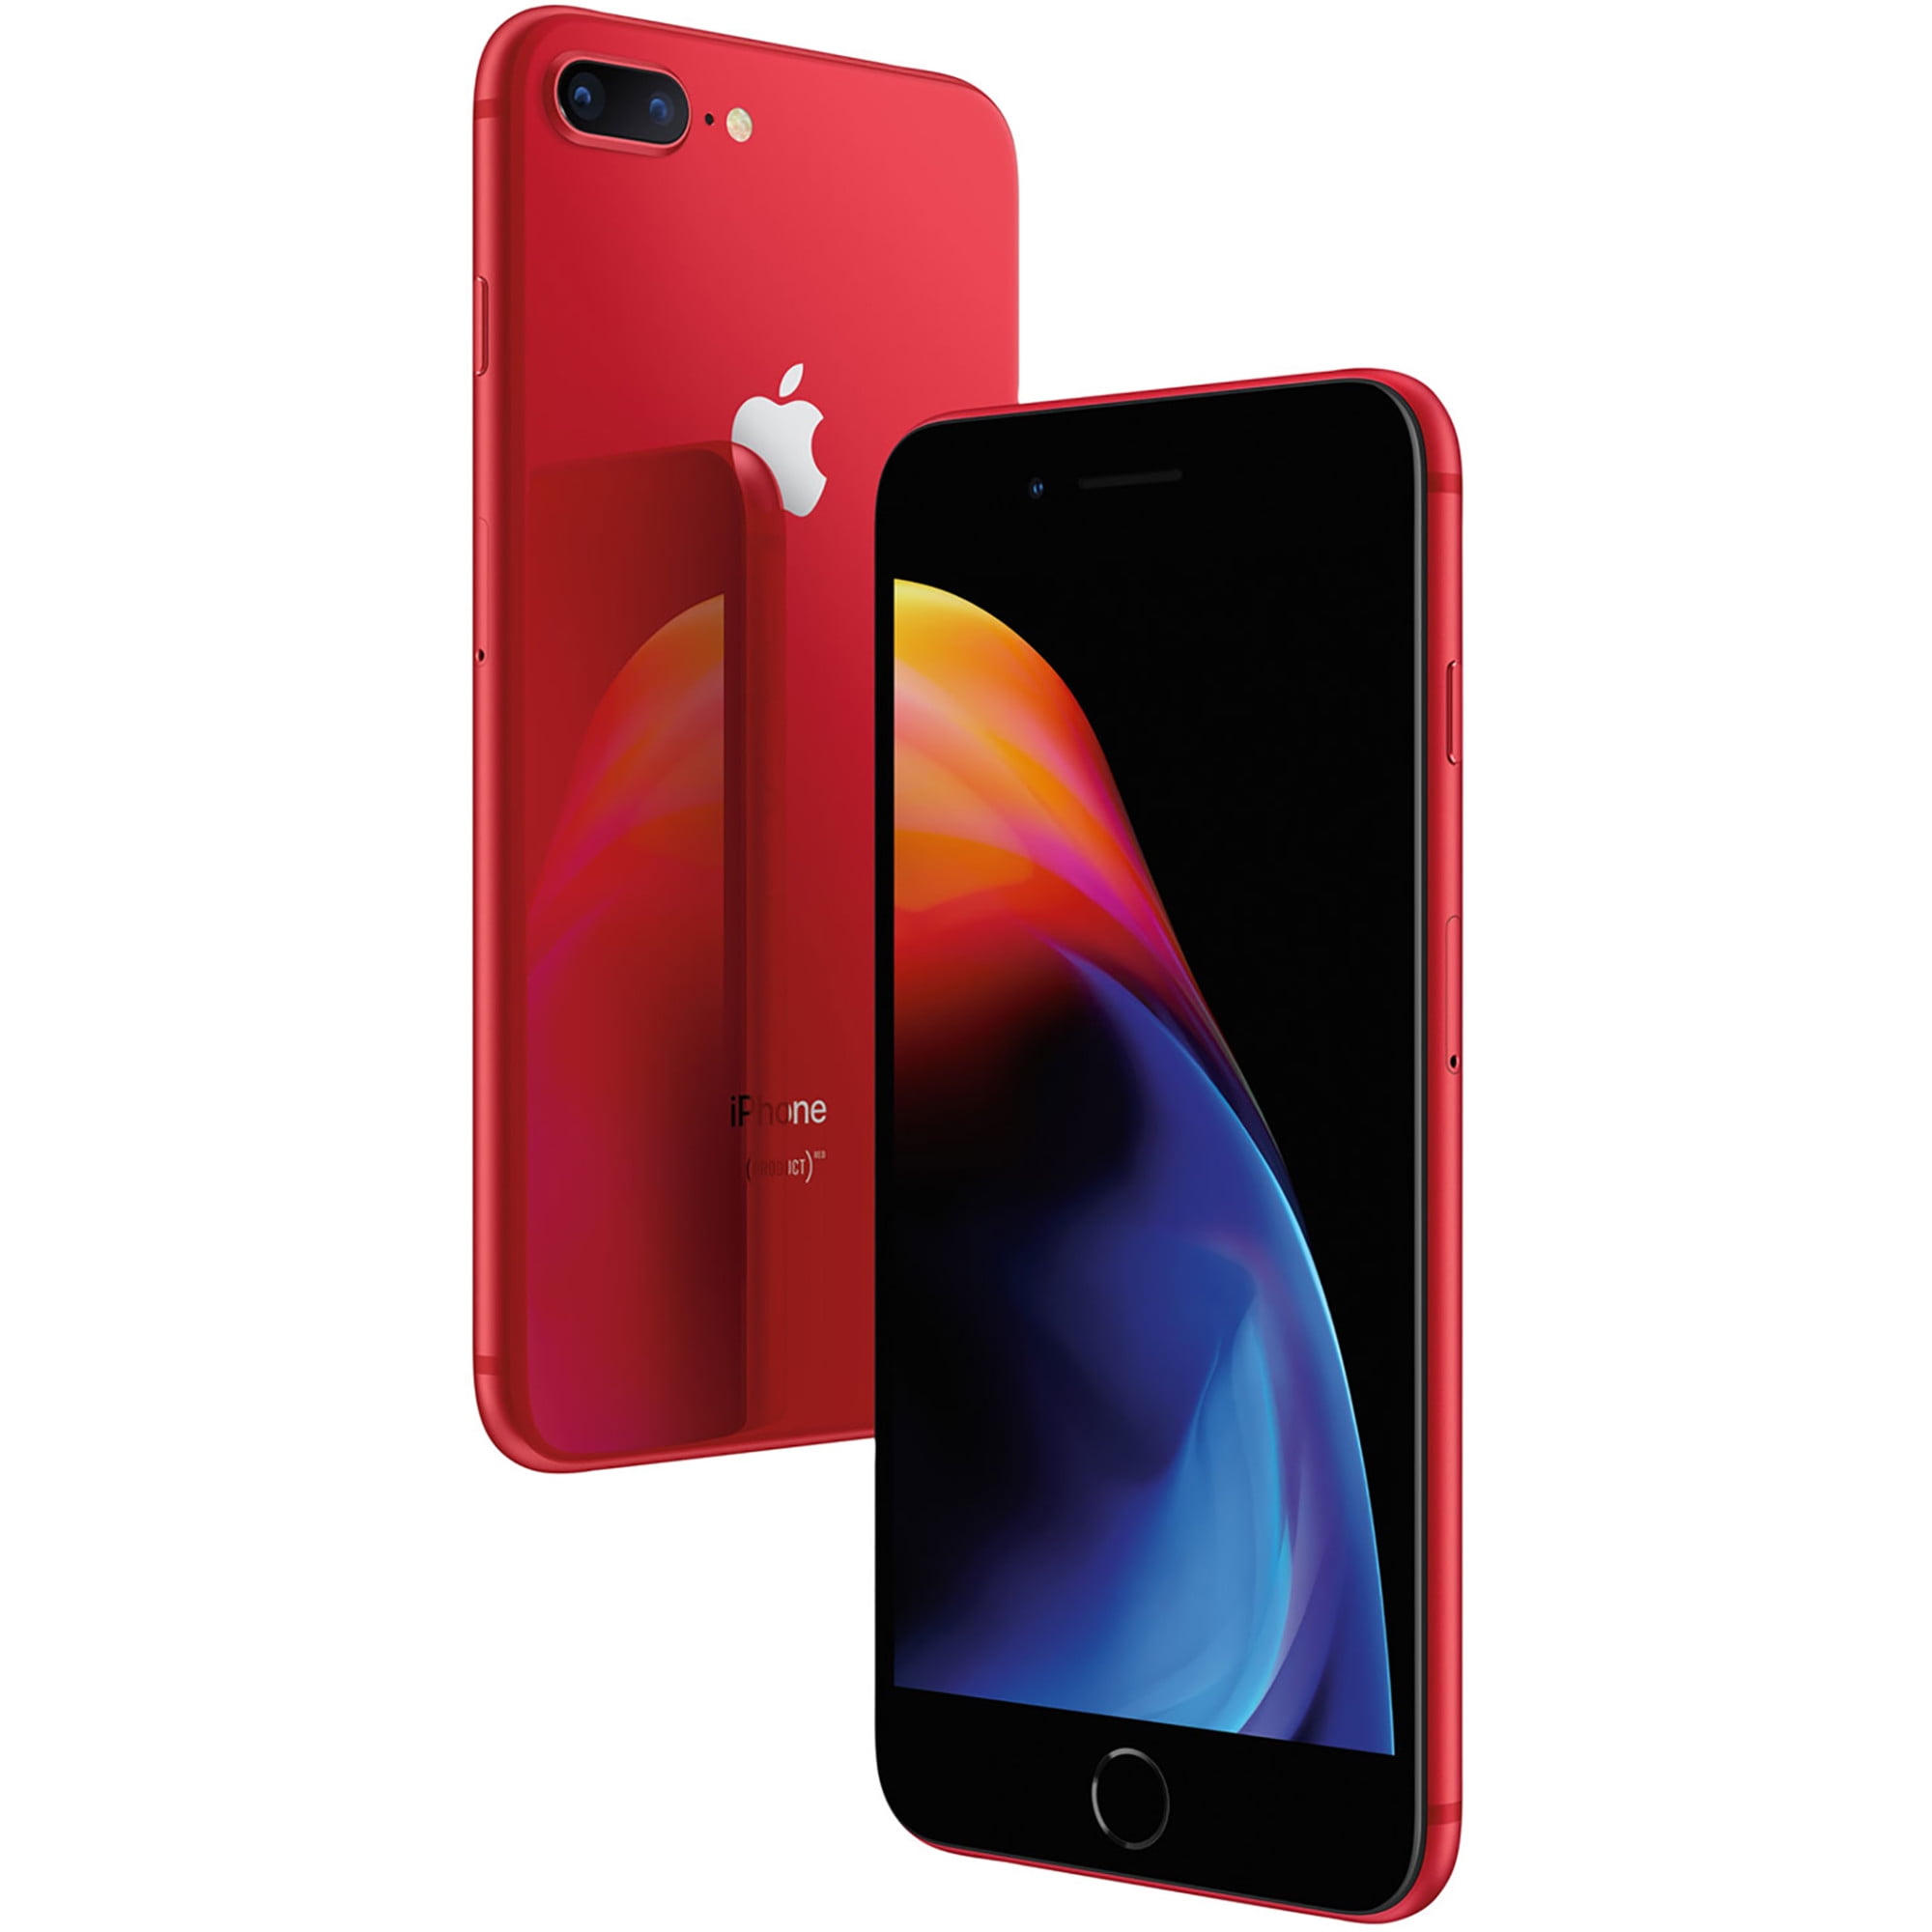 Apple iPhone 8 Plus 64GB Red Fully Unlocked (Verizon + AT&T + TMobile